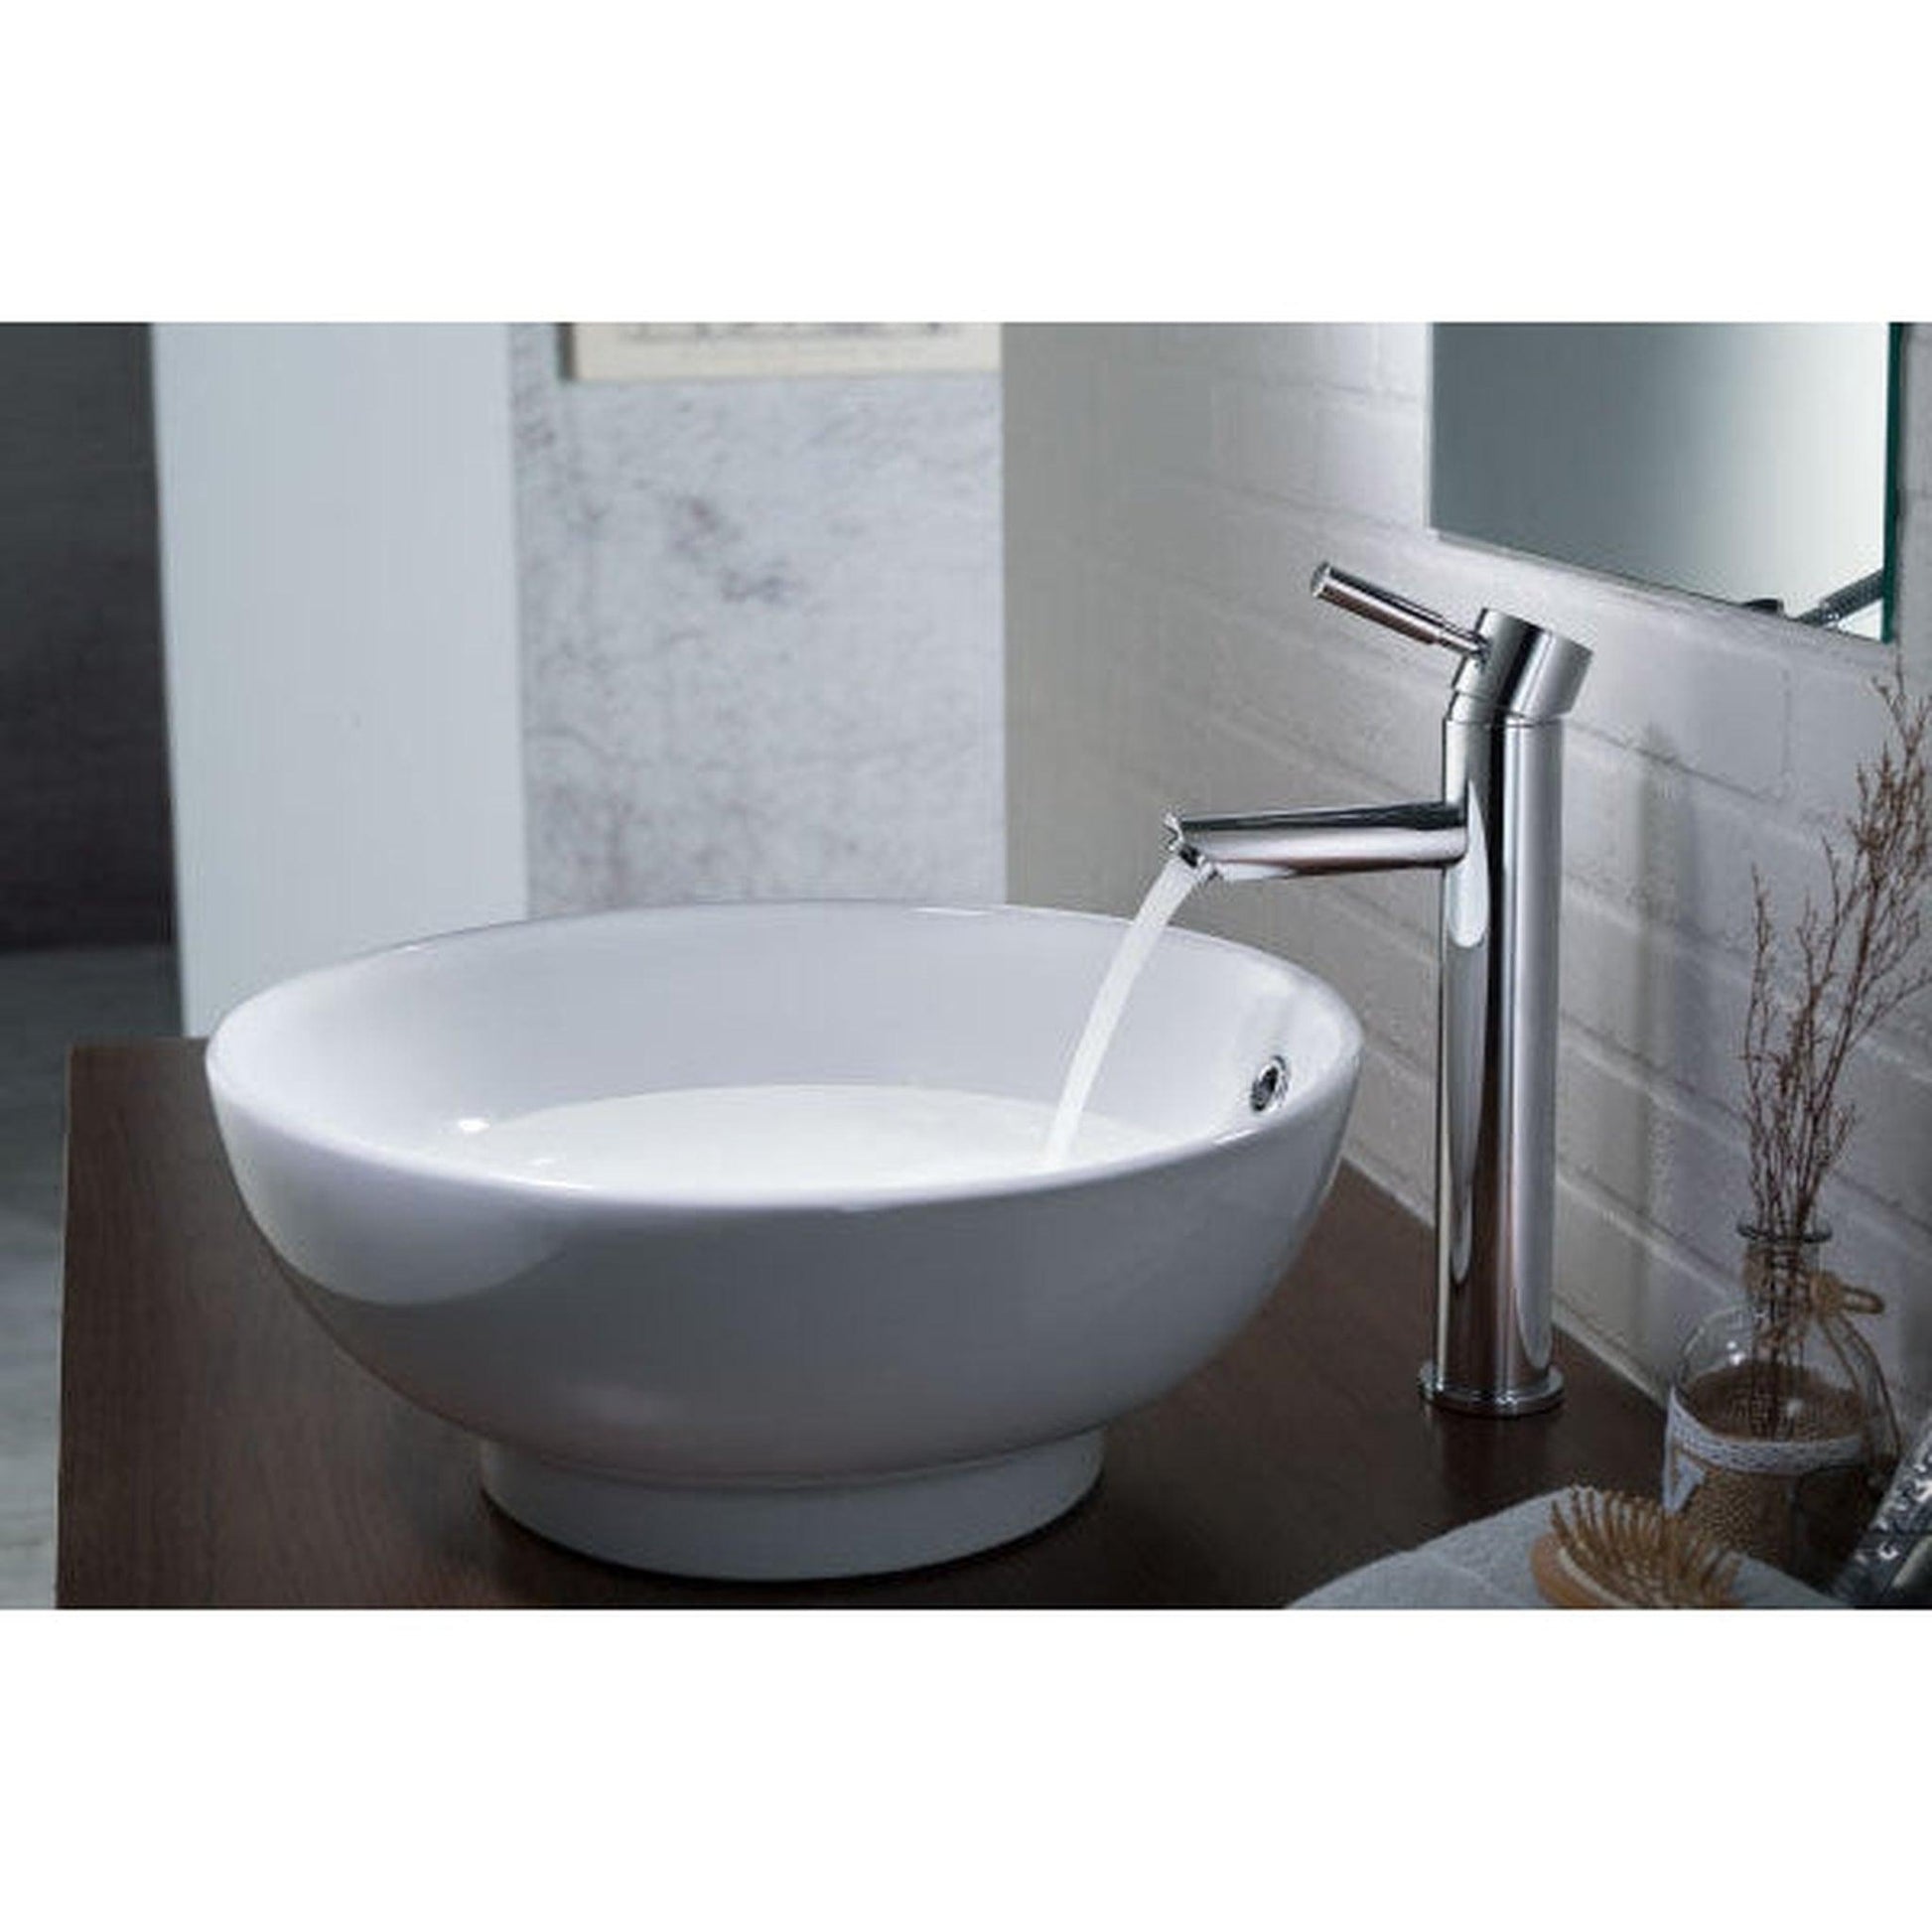 Isenberg Serie 100 12" Single-Hole Chrome Deck-Mounted Vessel Bathroom Sink Faucet